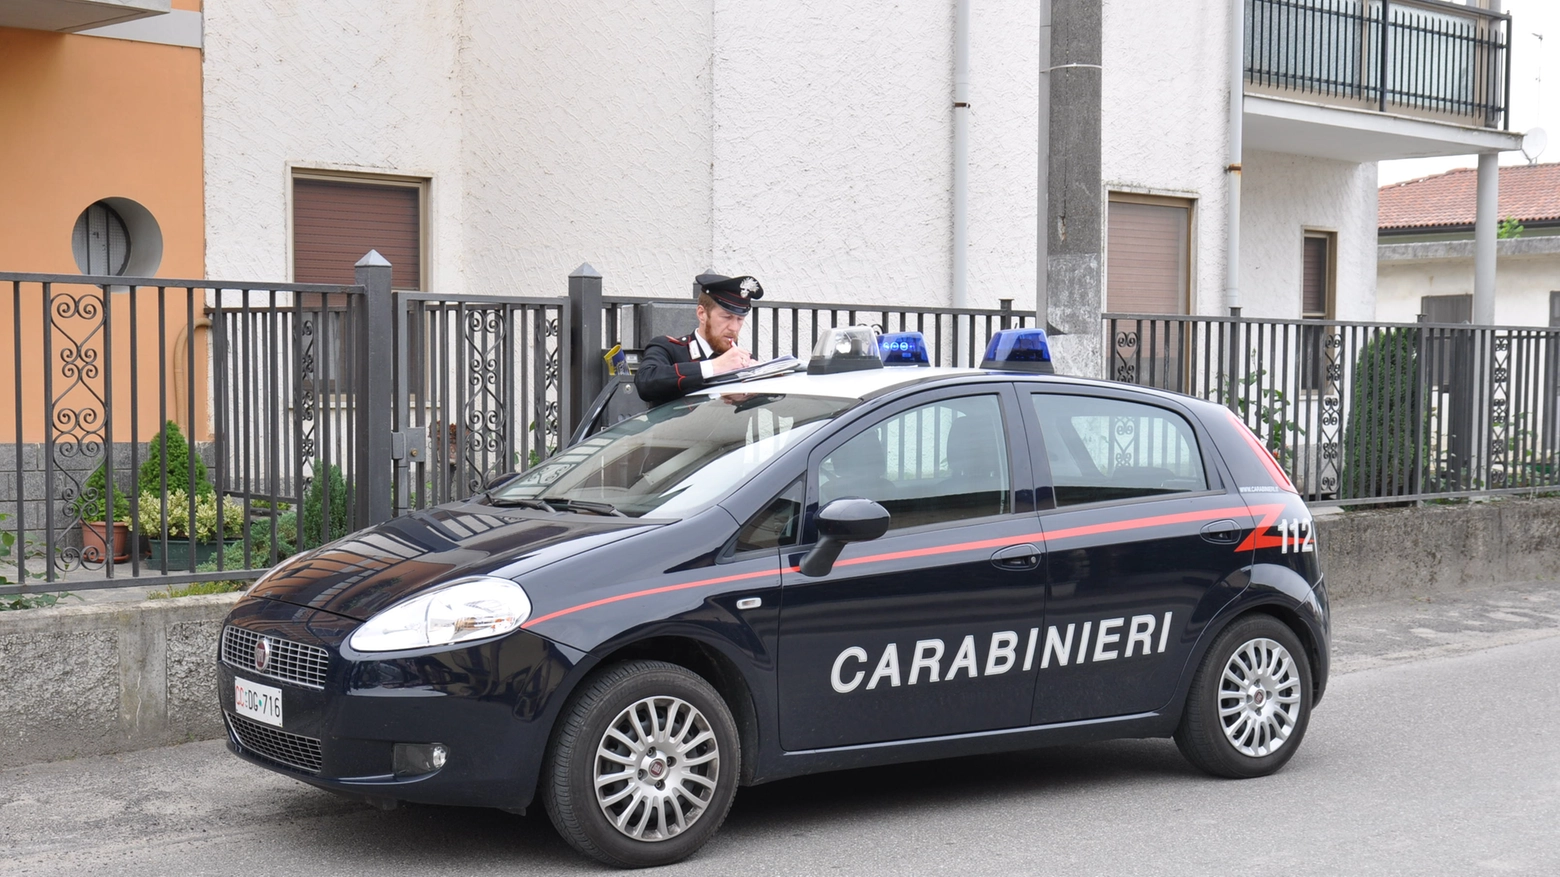 Indagano i carabinieri